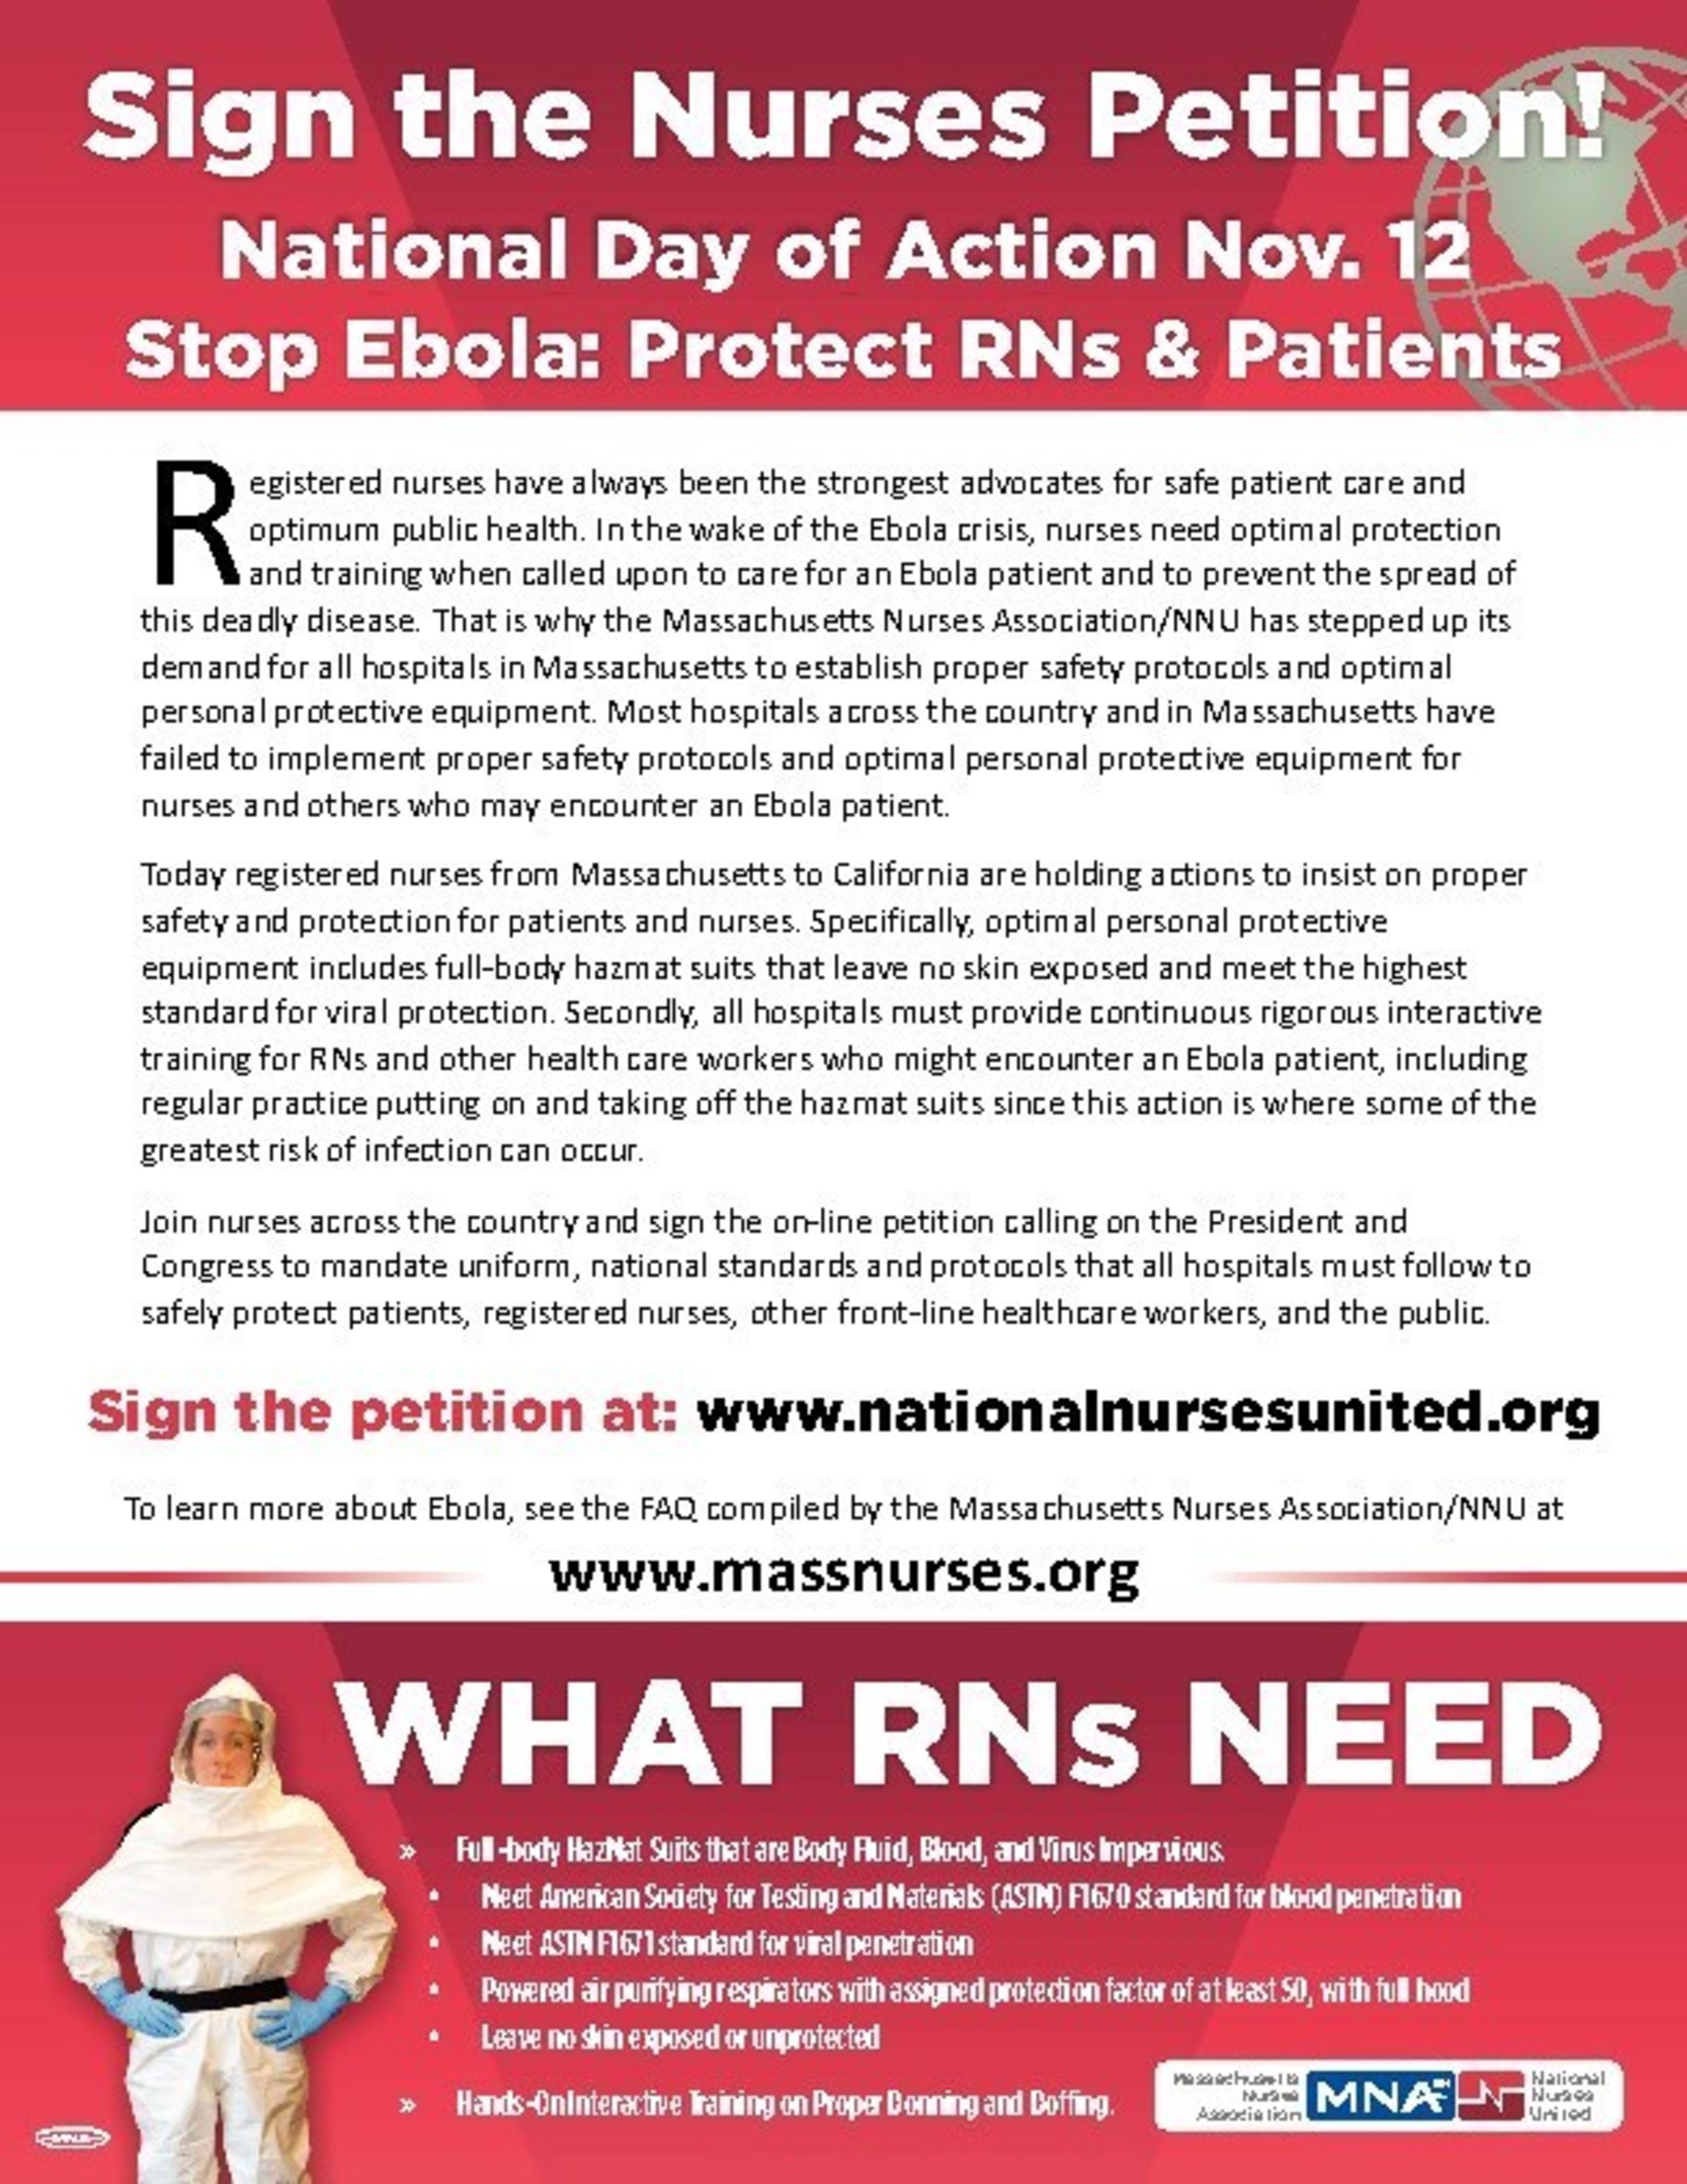 Massachusetts Nurses/NNU Ebola Leaflet for National Day of Action, Nov. 12